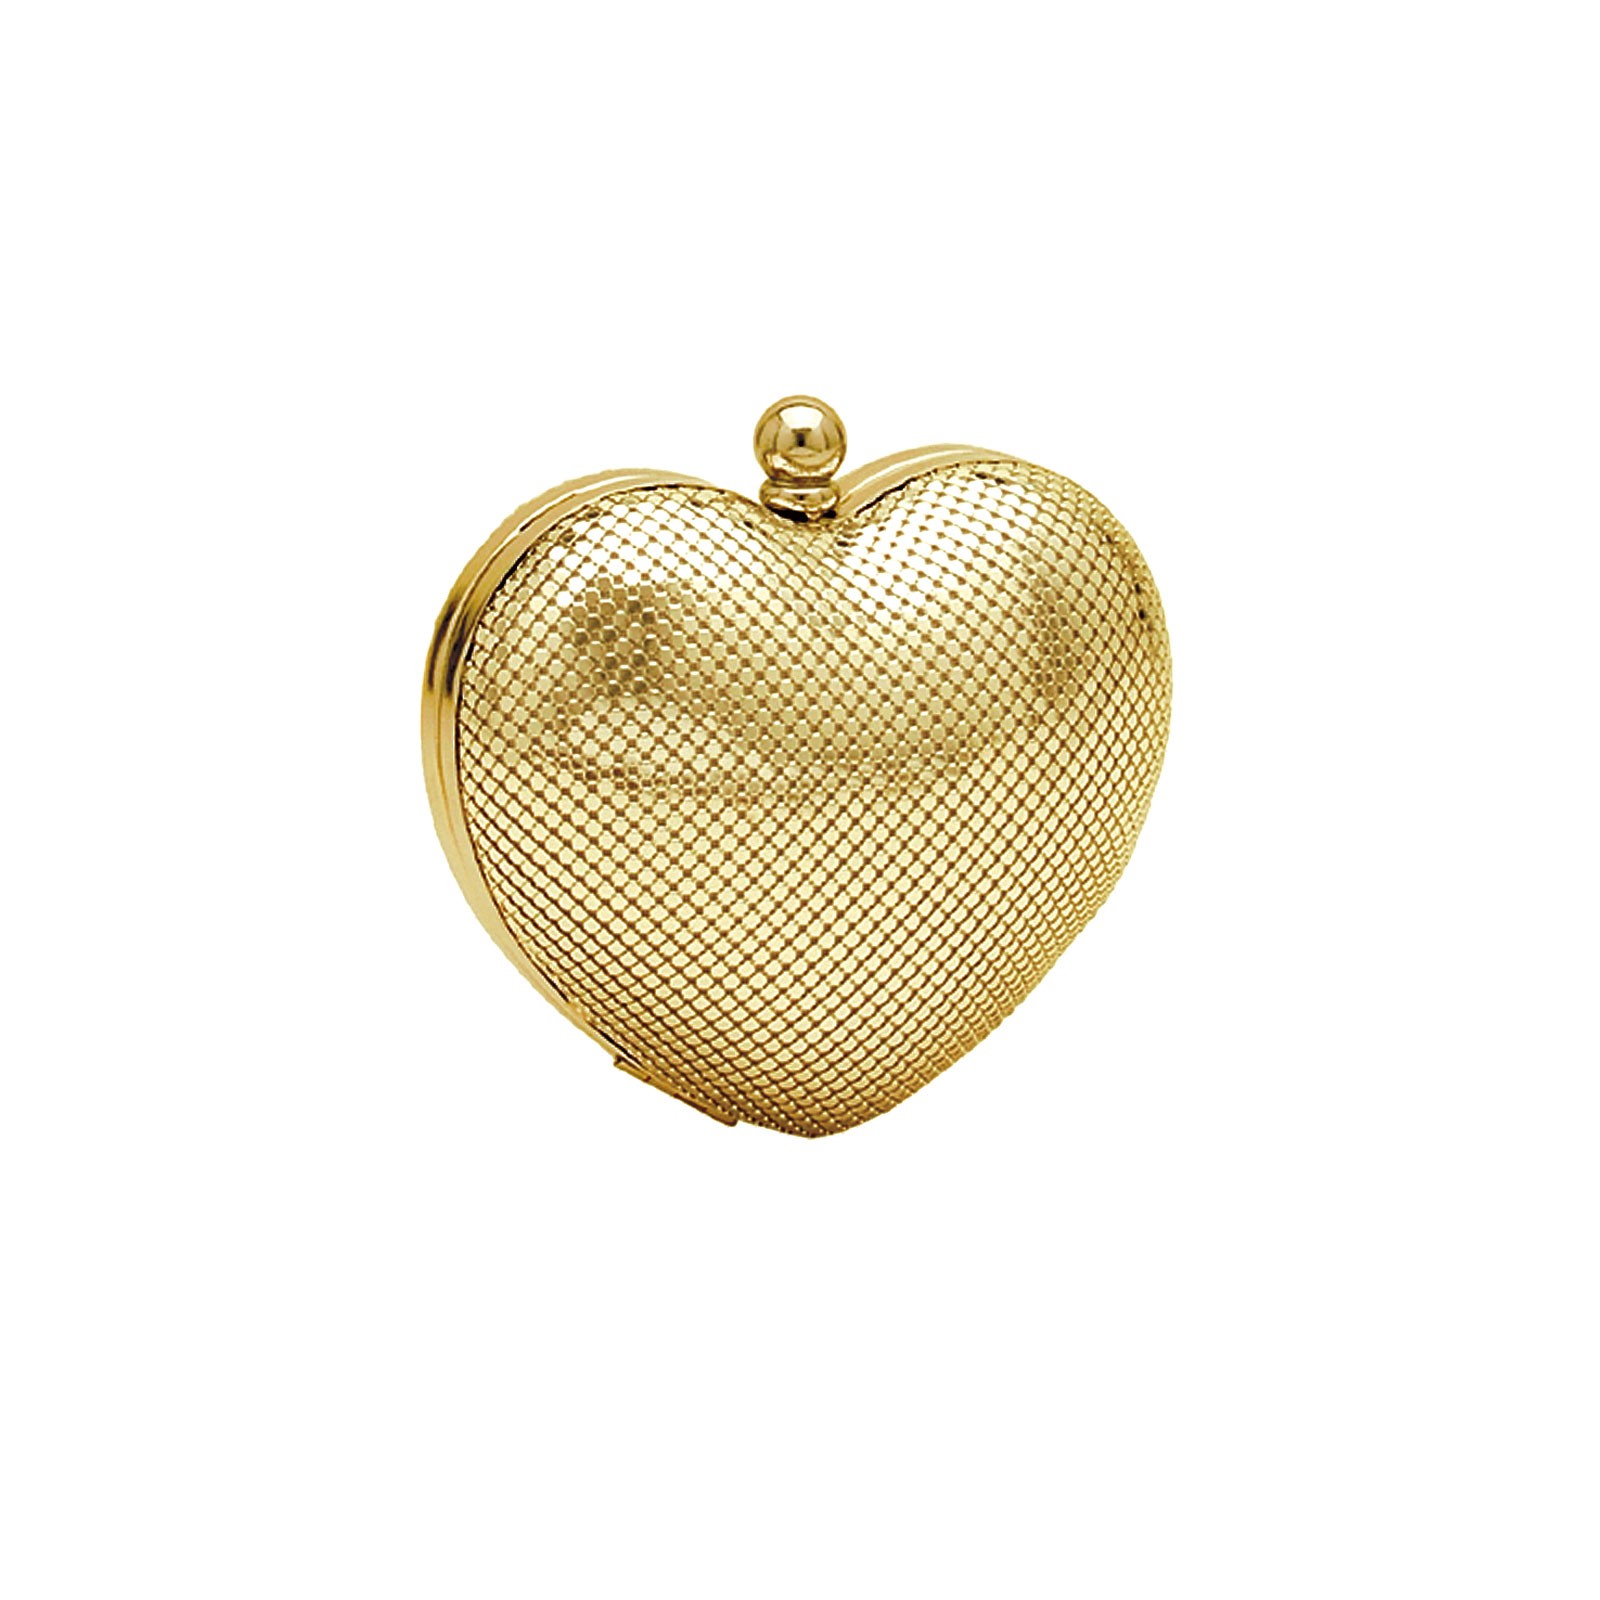 1-5777-Gold-charity-heart-minaudiere-metallic-clutch-handbag-1600